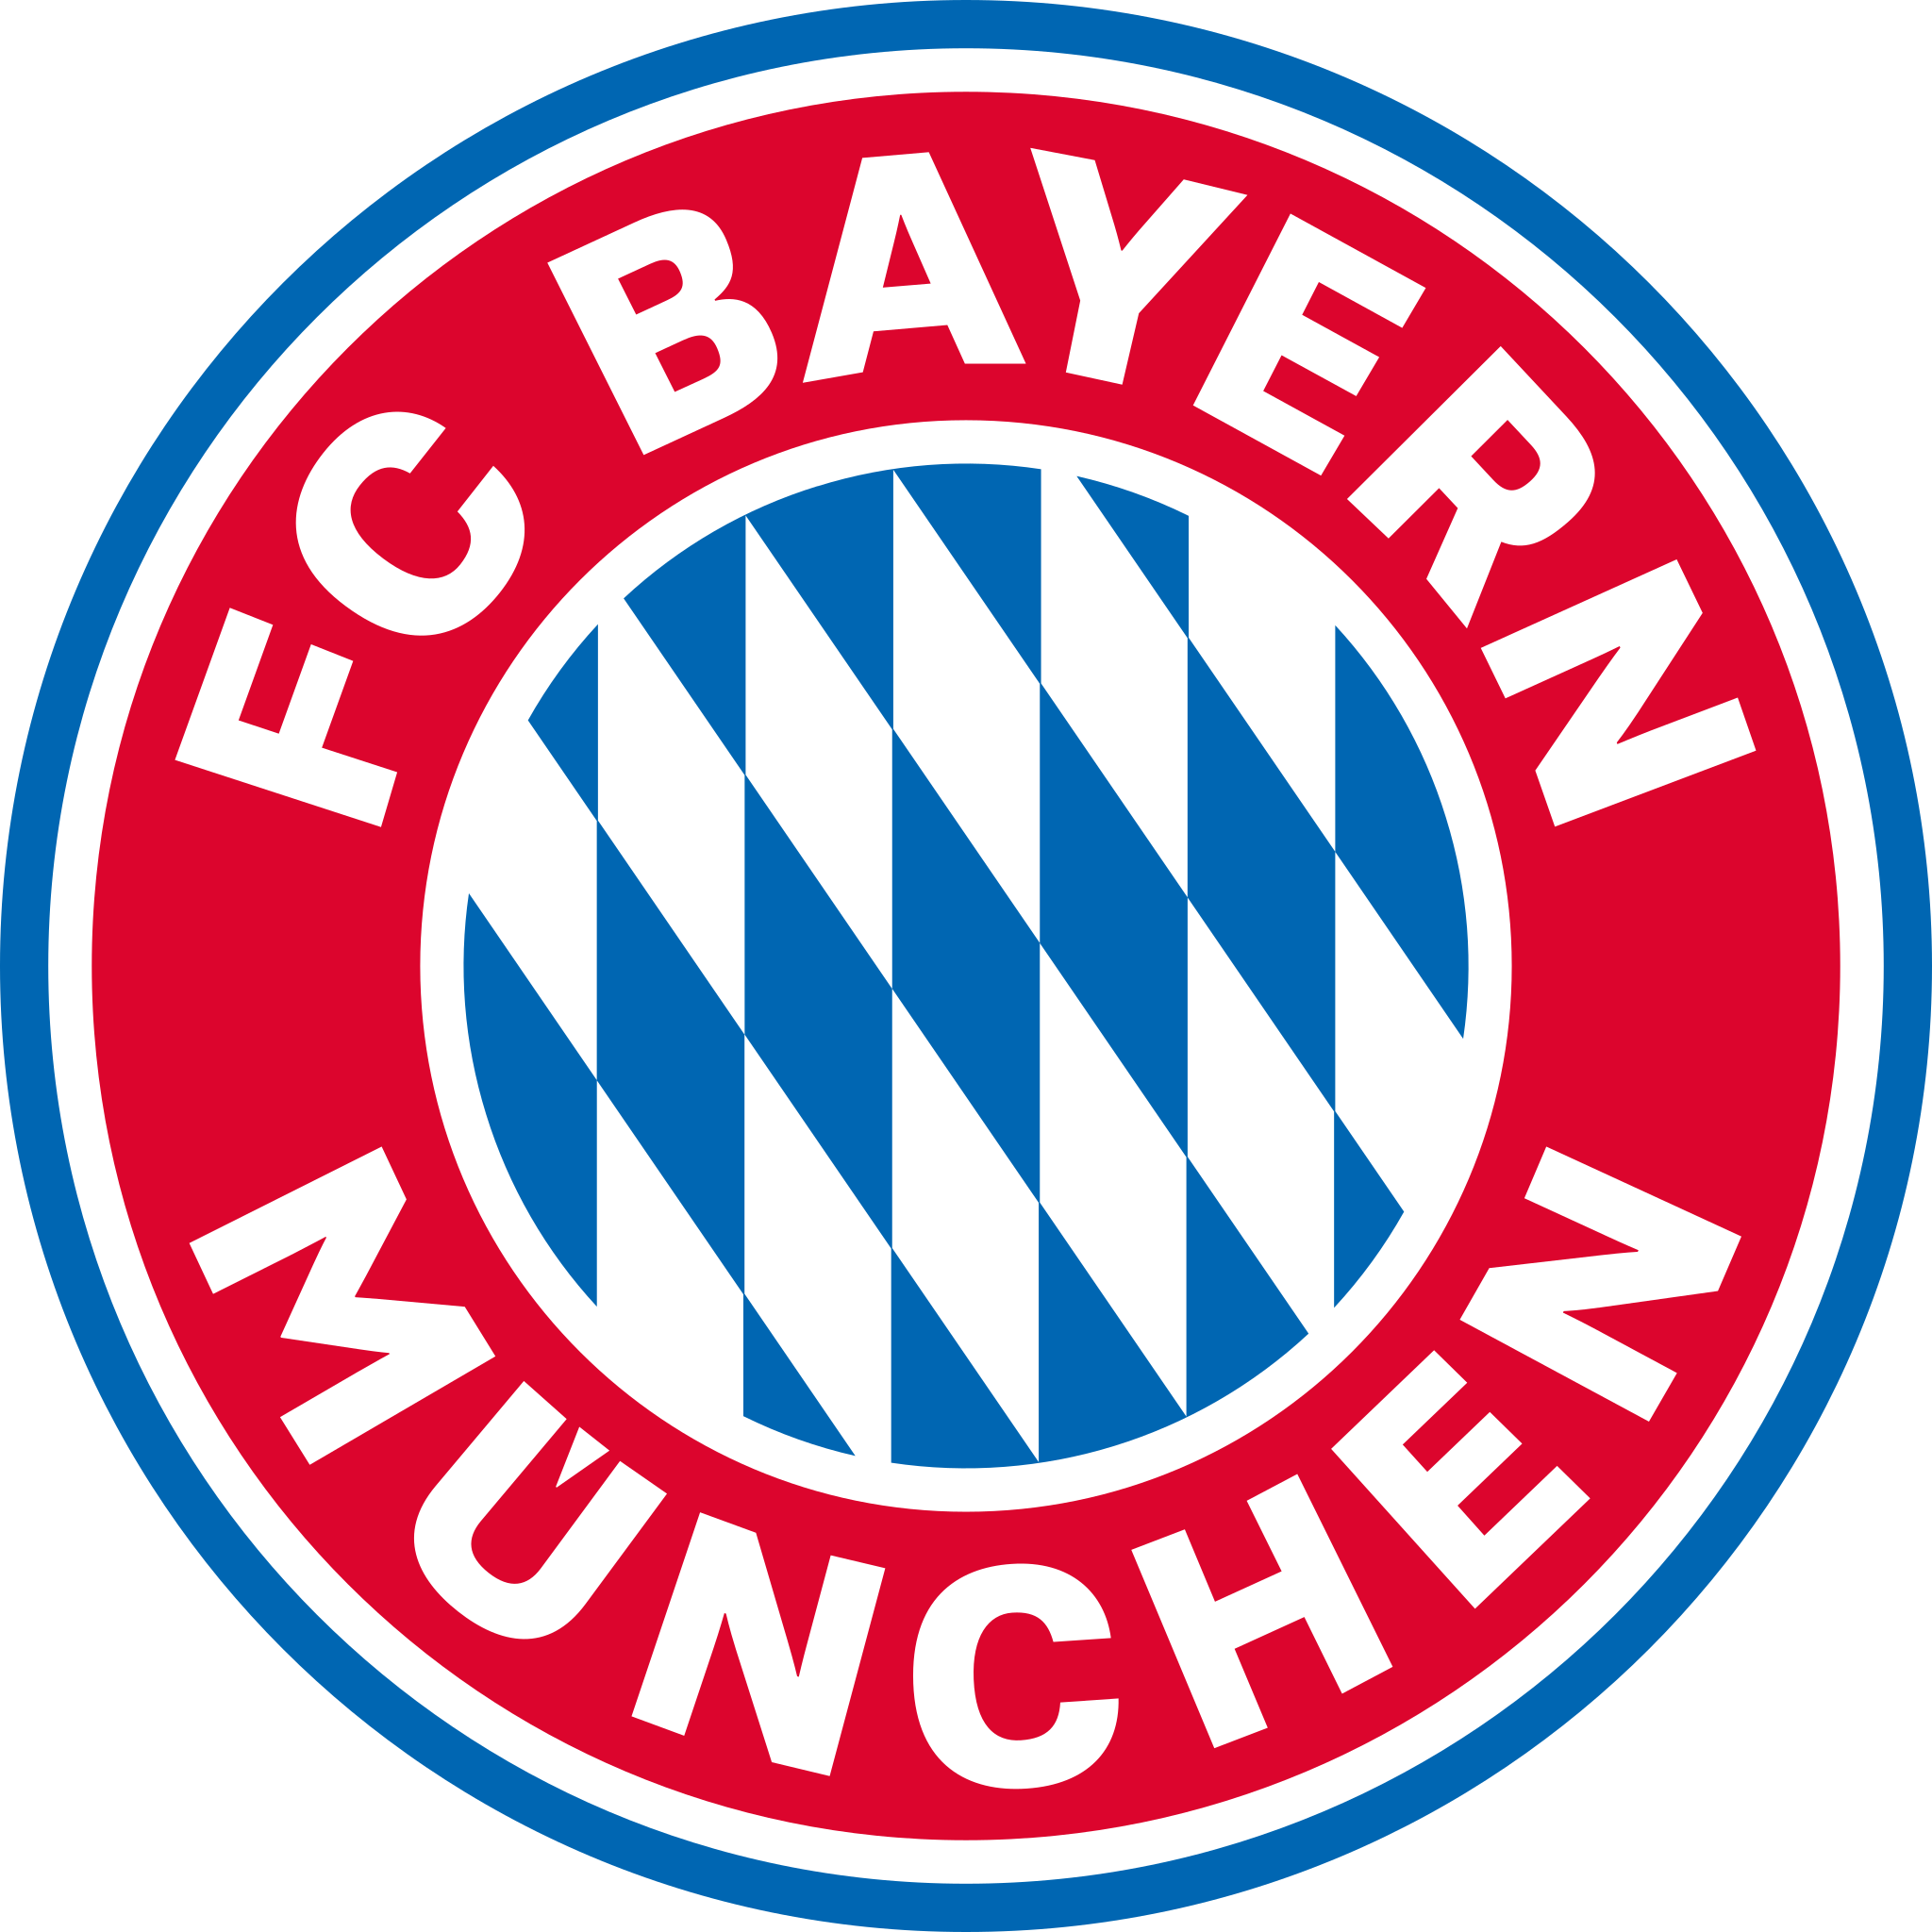 File:FC Bayern München logo (2017).svg - Wikimedia Commons